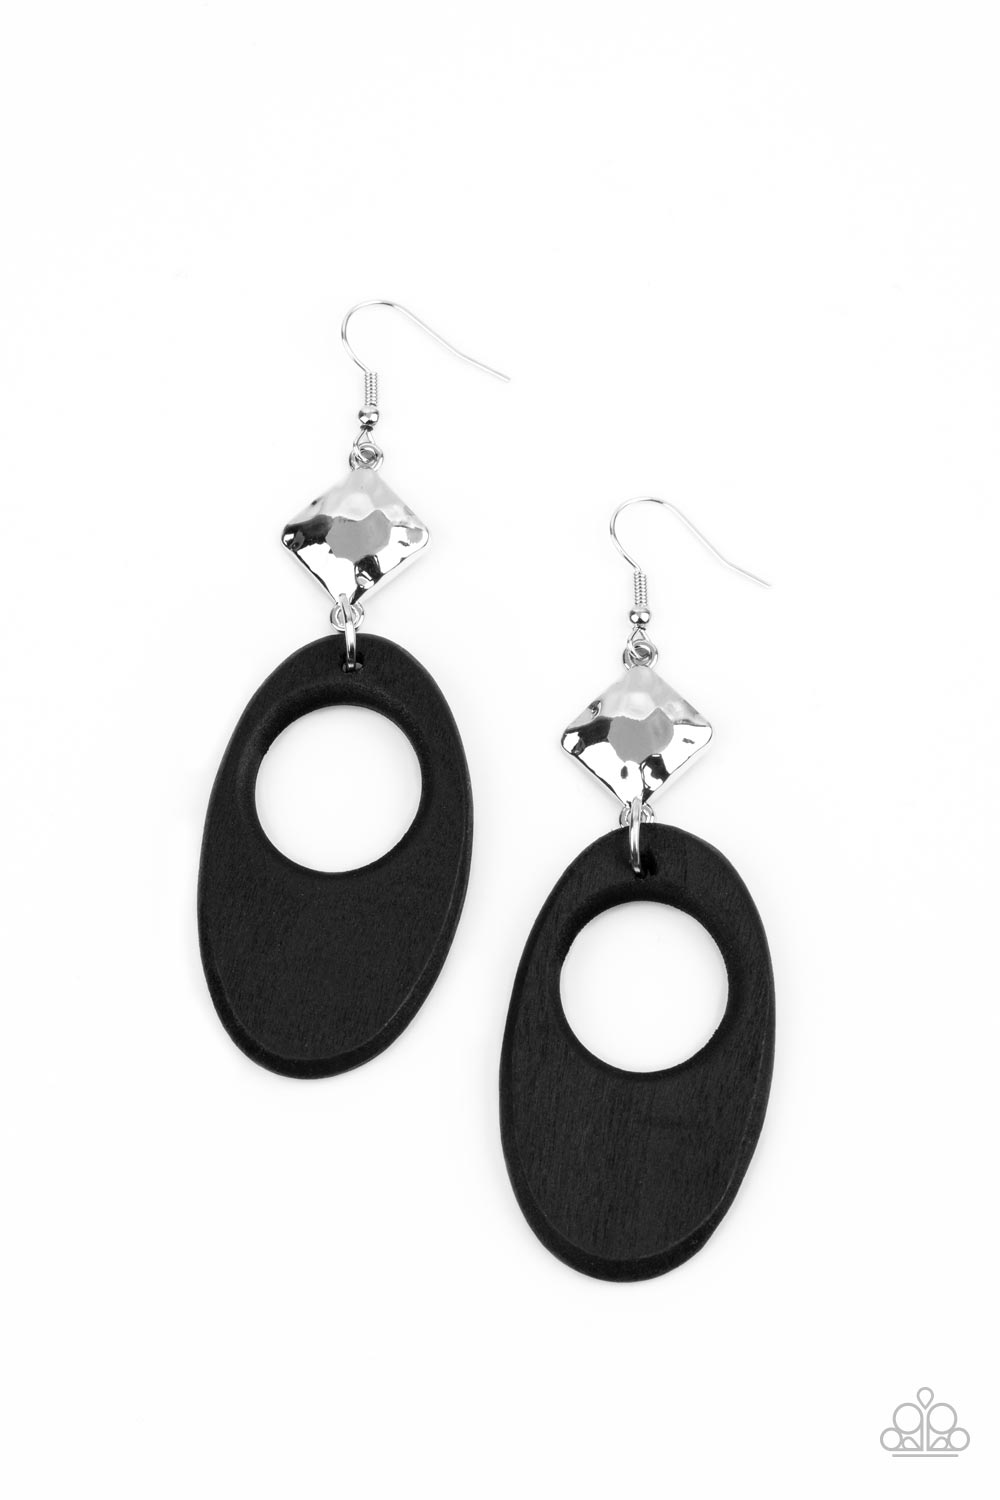 Paparazzi Accessories - Retro Reveal #E544 - Black Earrings